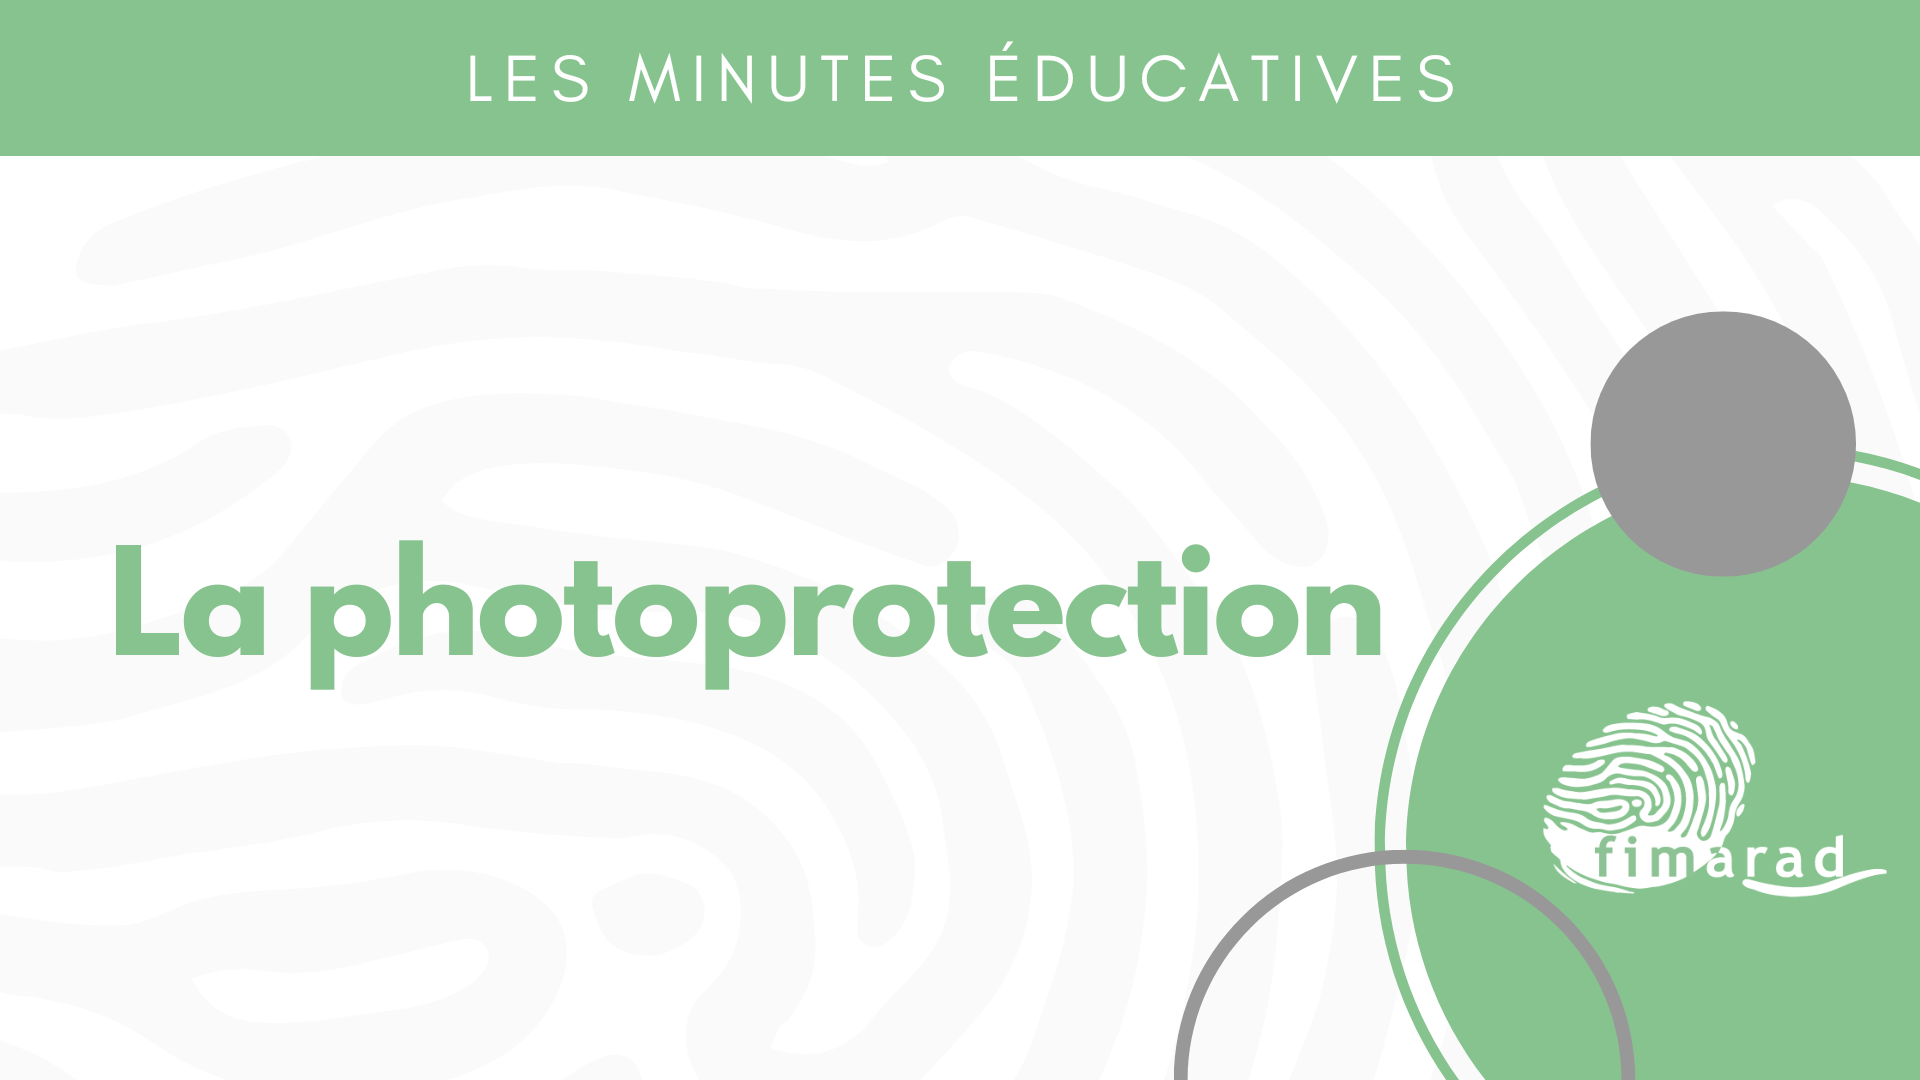 La photoprotection